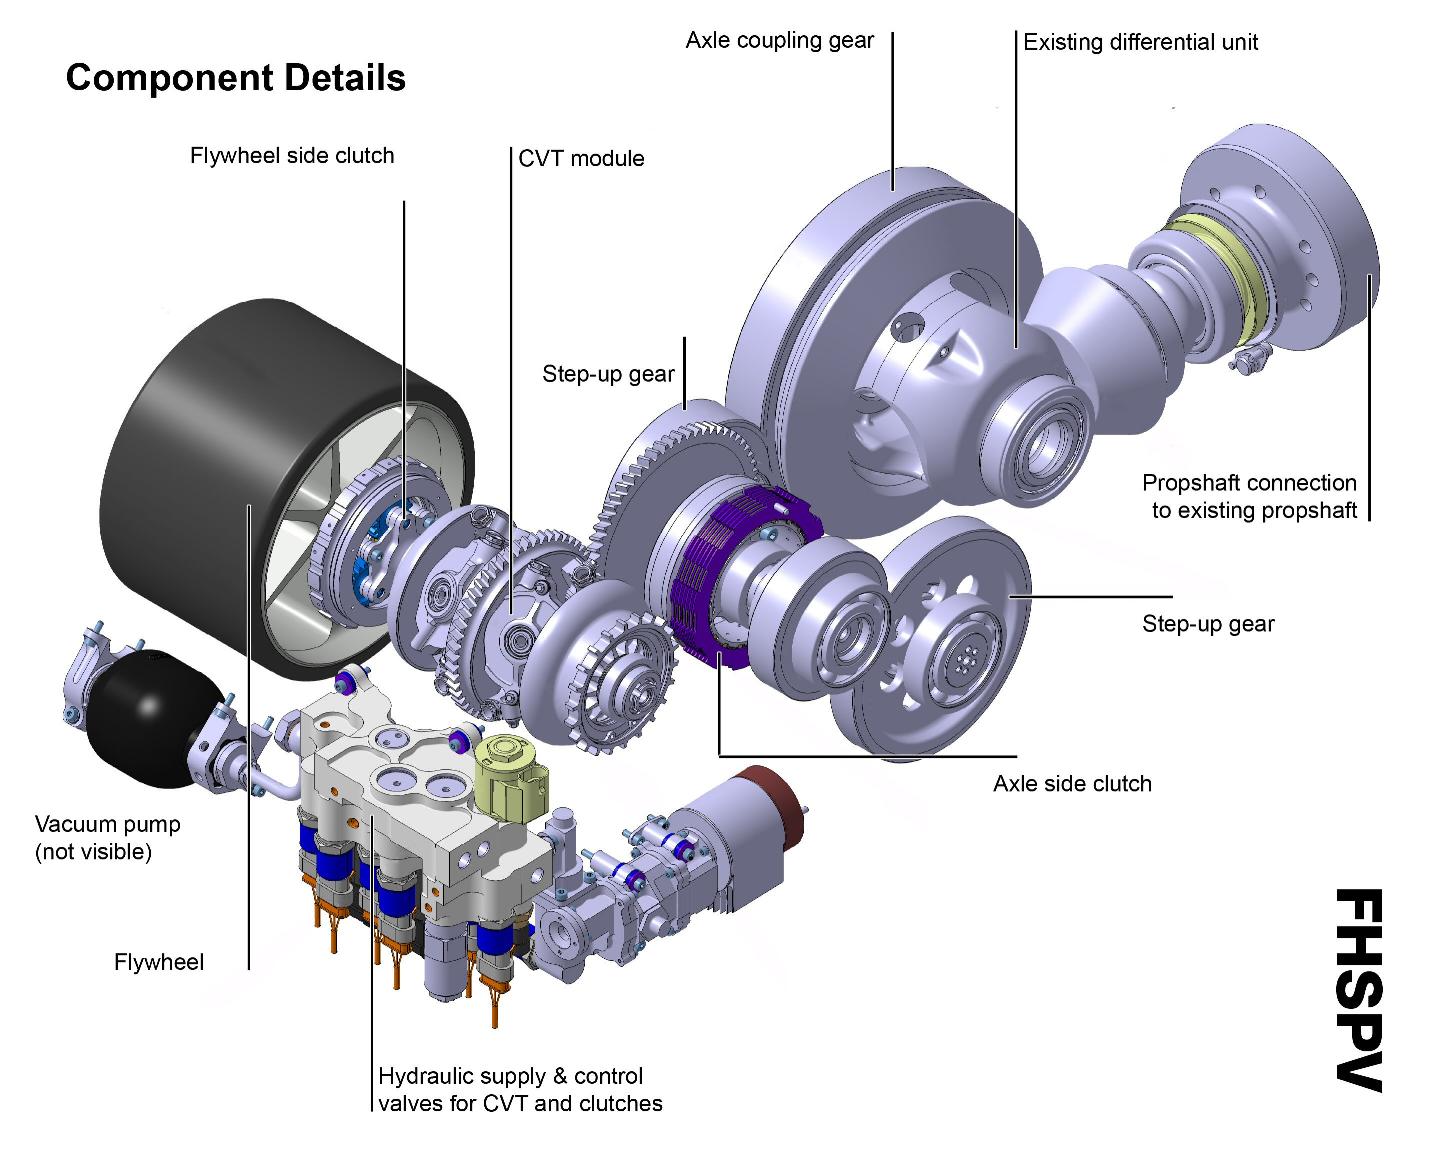 Jaguar Flywheel Hybrid System Explained - autoevolution